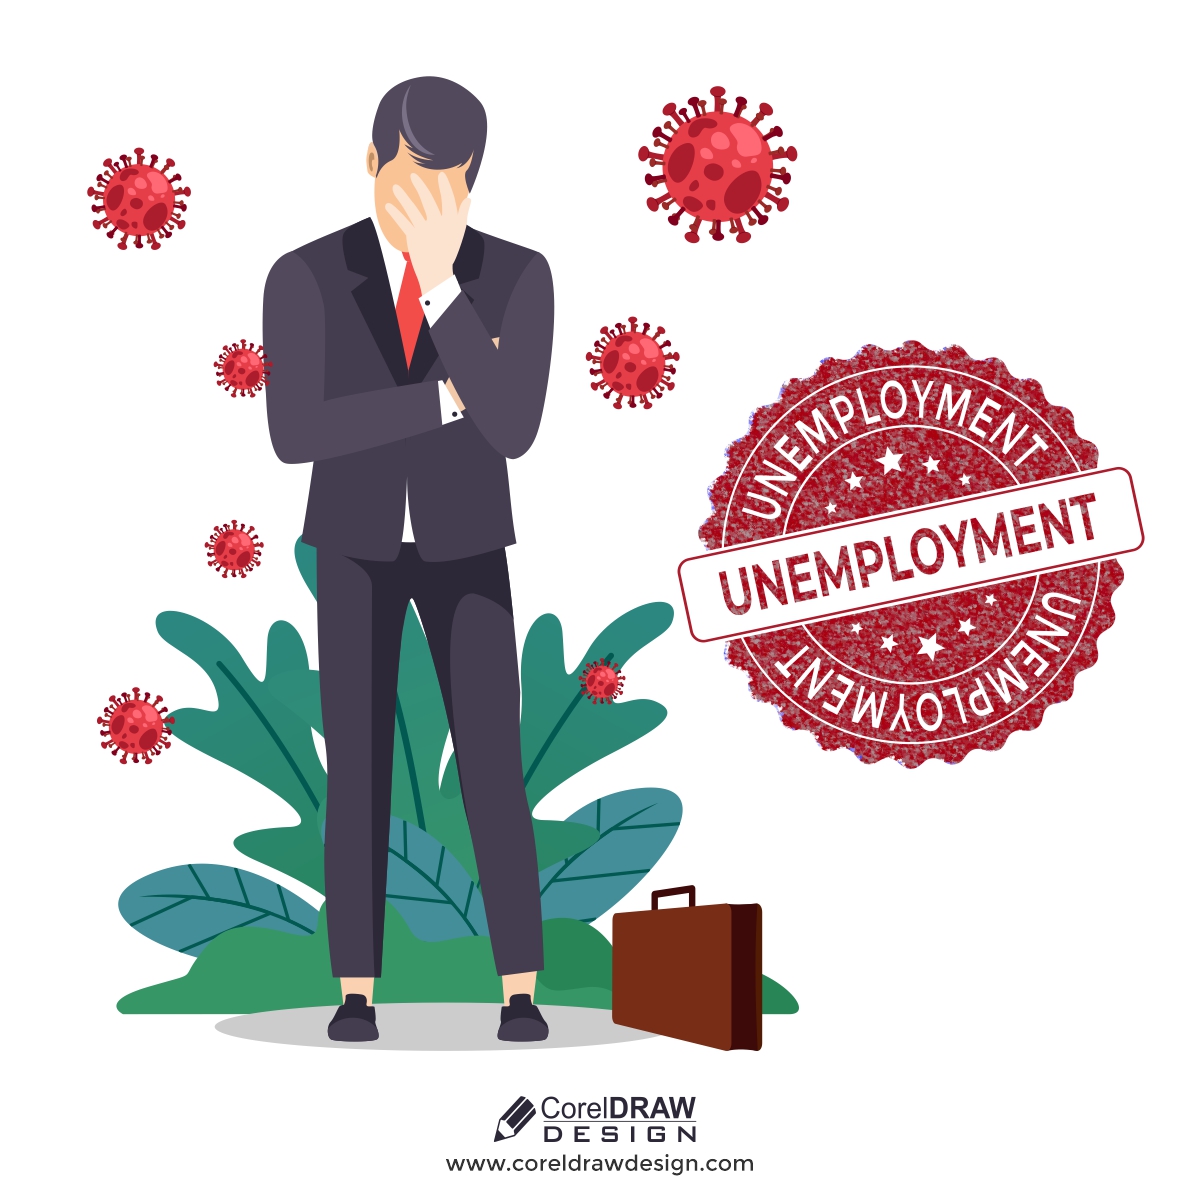 Unemployment due to Corona, Sad Man Free Vector Illustration